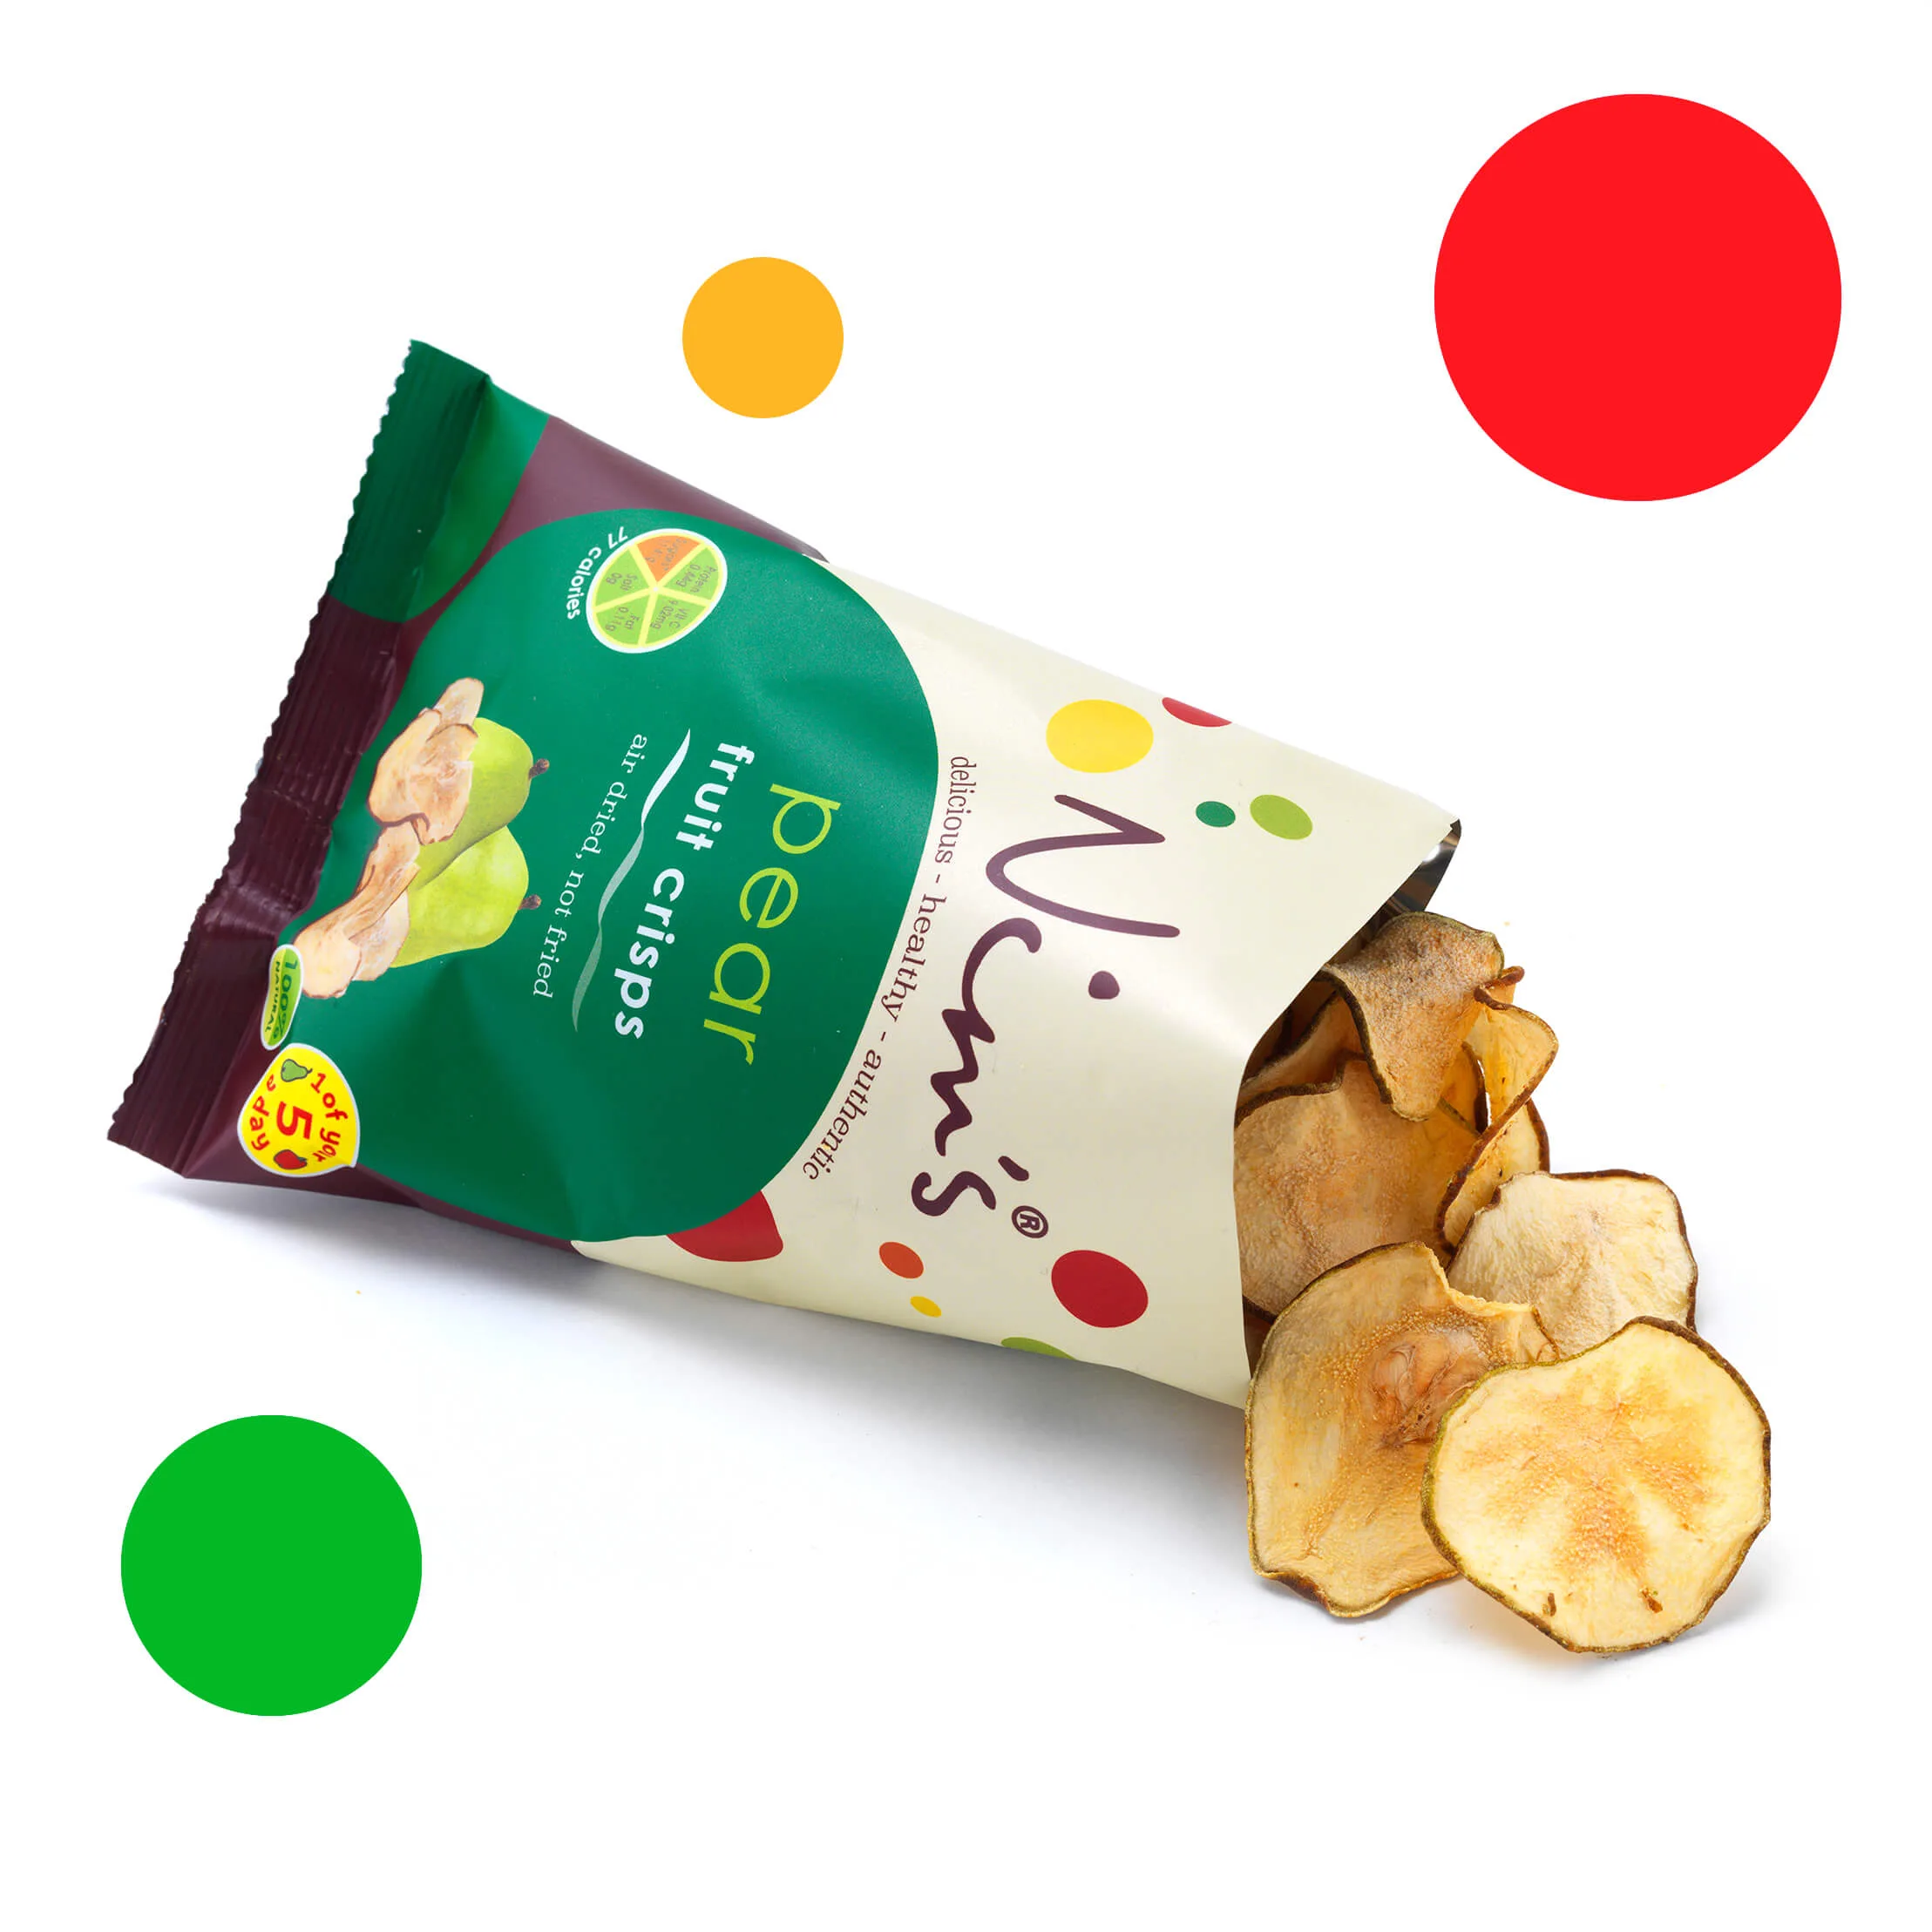 Nim’s Premium Pear Crisps: The Perfect Healthy Snack Option